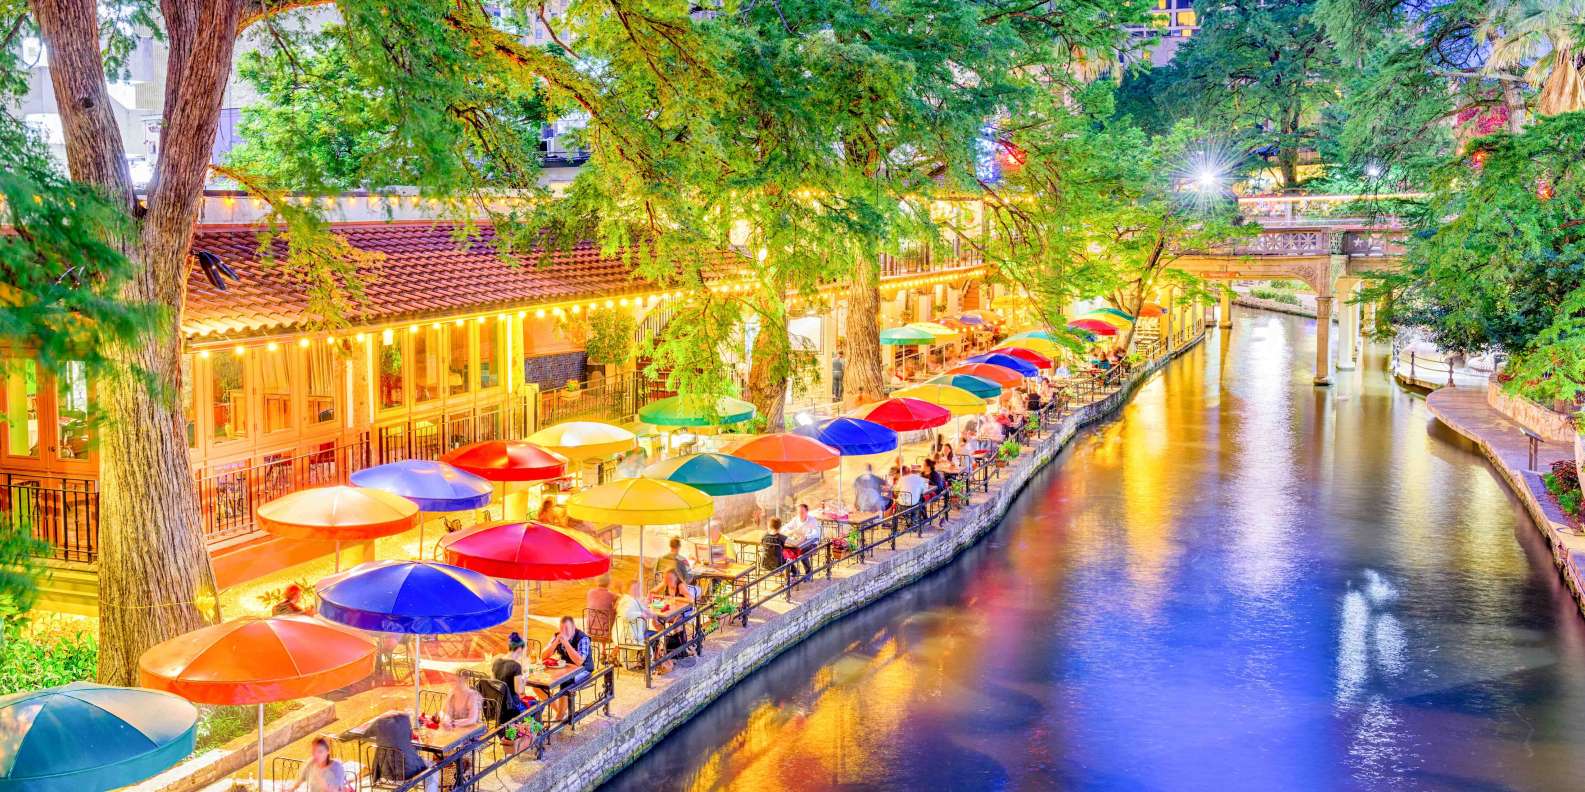 The BEST San Antonio River Walk Self-guided activities 2023 - FREE